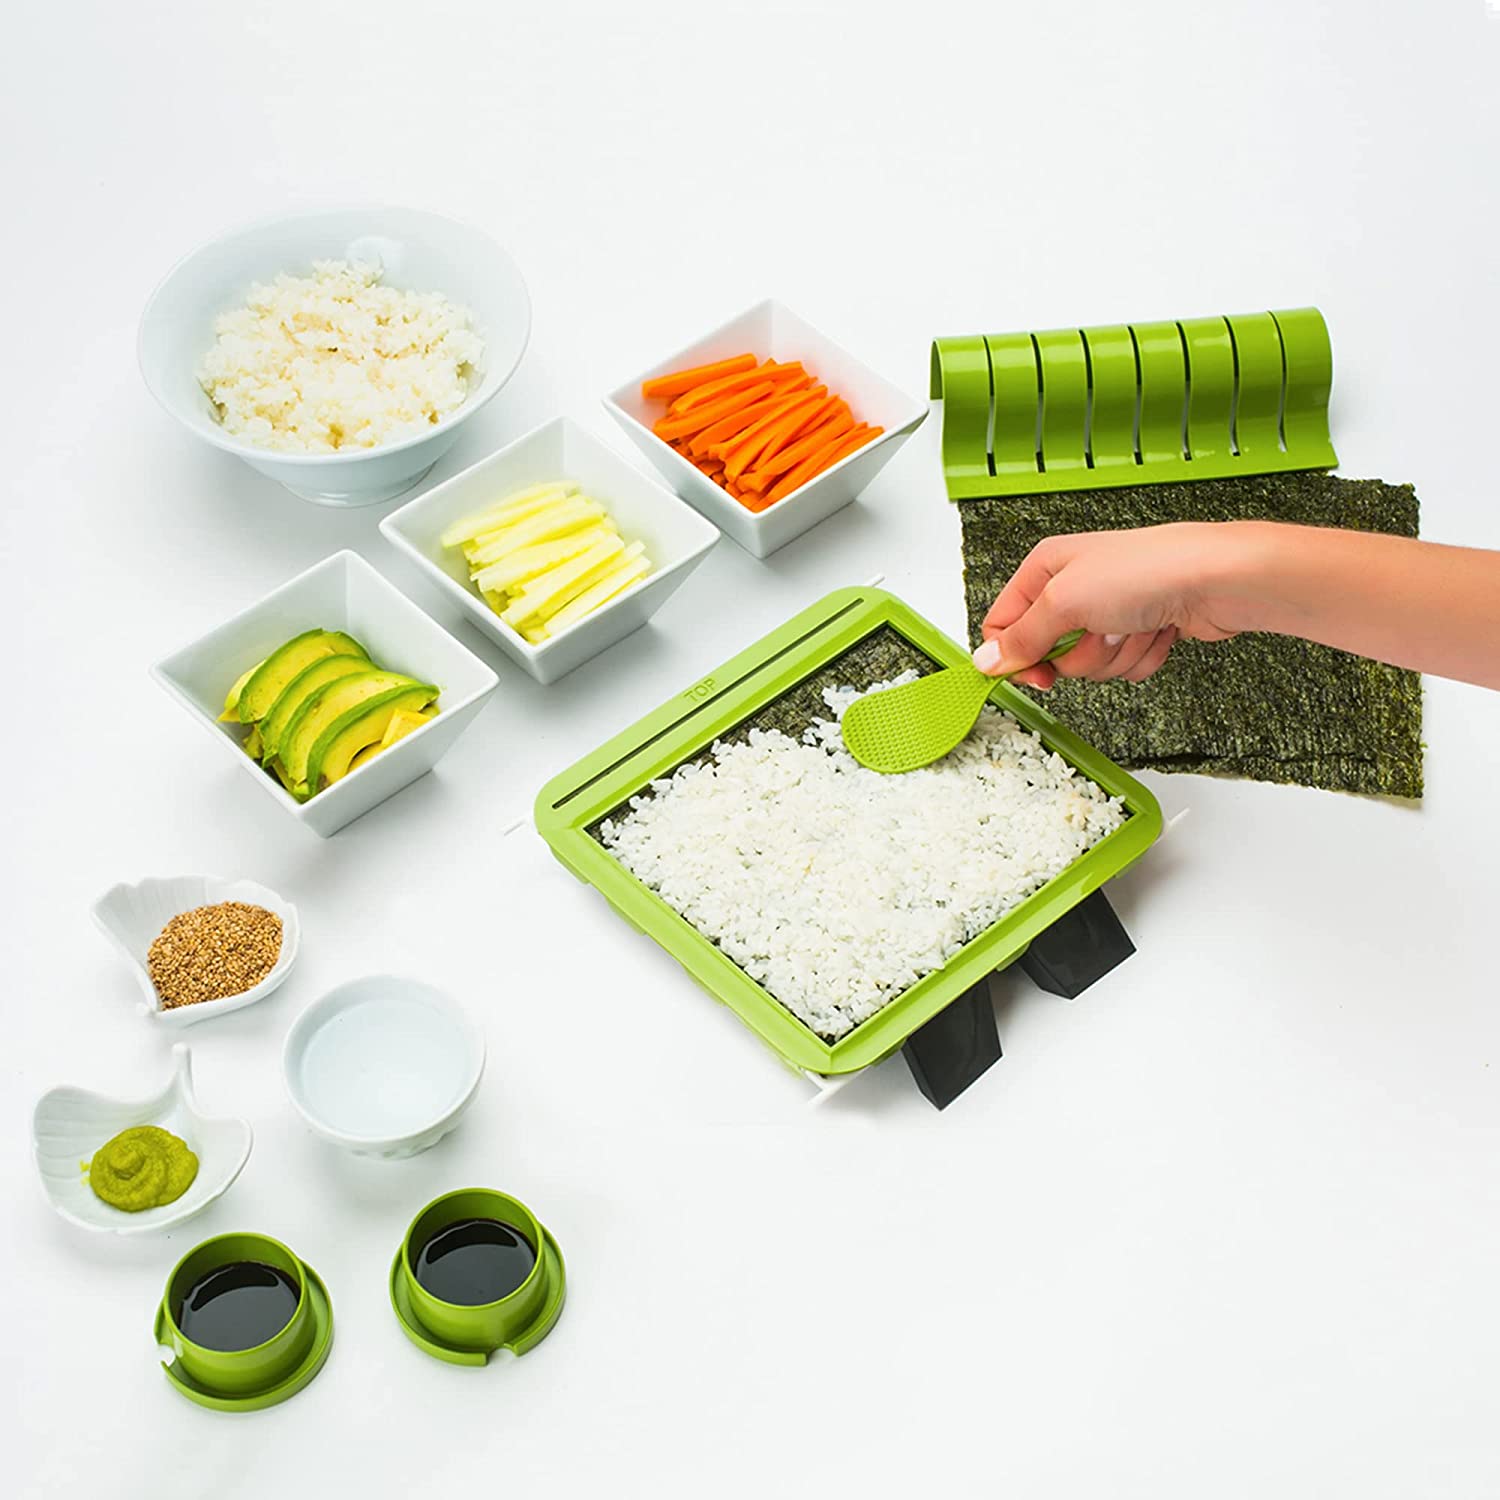 https://www.dontwasteyourmoney.com/wp-content/uploads/2023/02/sushiquik-roll-cutter-training-frame-sushi-making-kit-sushi-making-kit.jpg